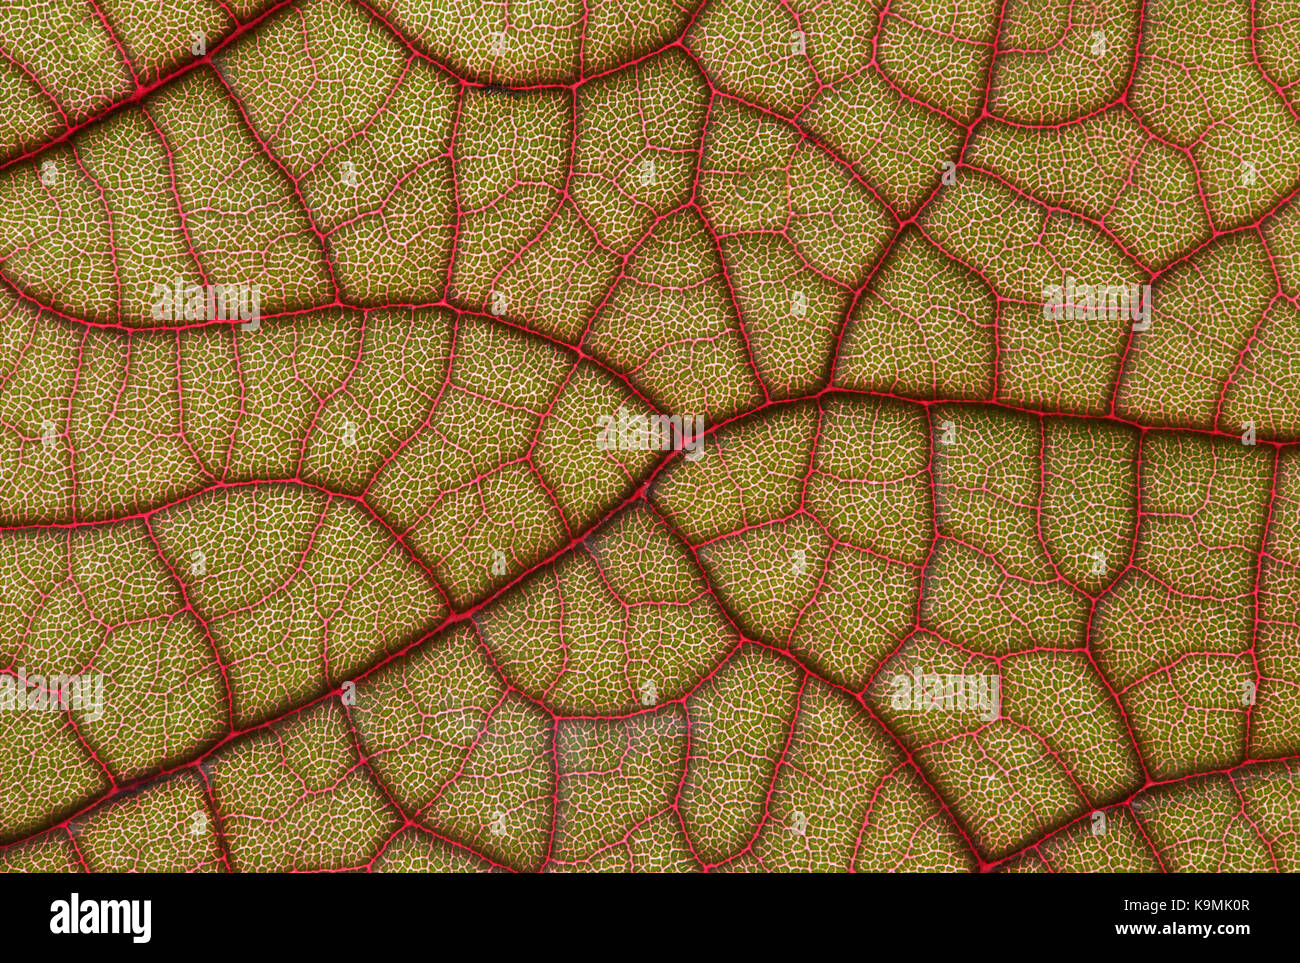 Netzartige Blattaderung eines neu getriebenen Blatts des Ledermantelbaums (Coccoloba pubescens), Familie der Knöterichgewächse (Polygonaceae) Stock Photo